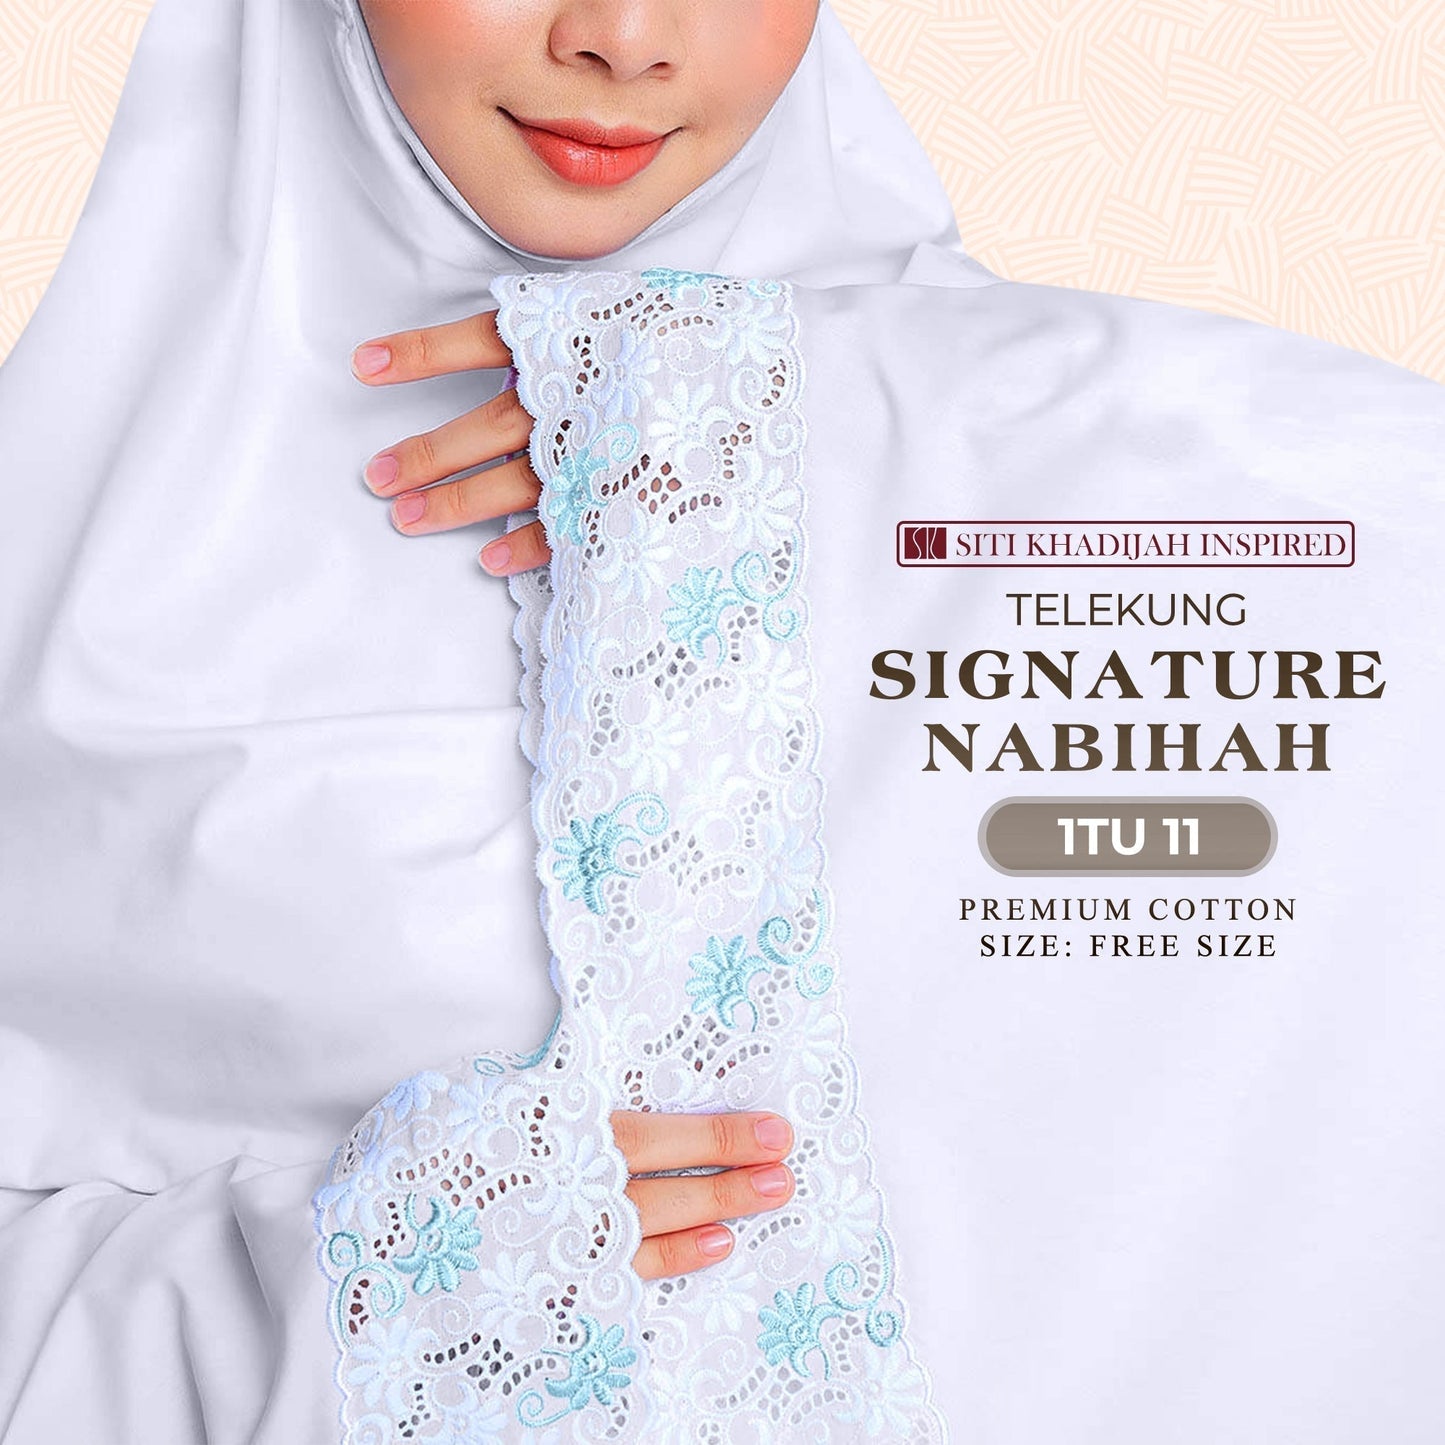 Telekung SK Signature Nabihah - RM39